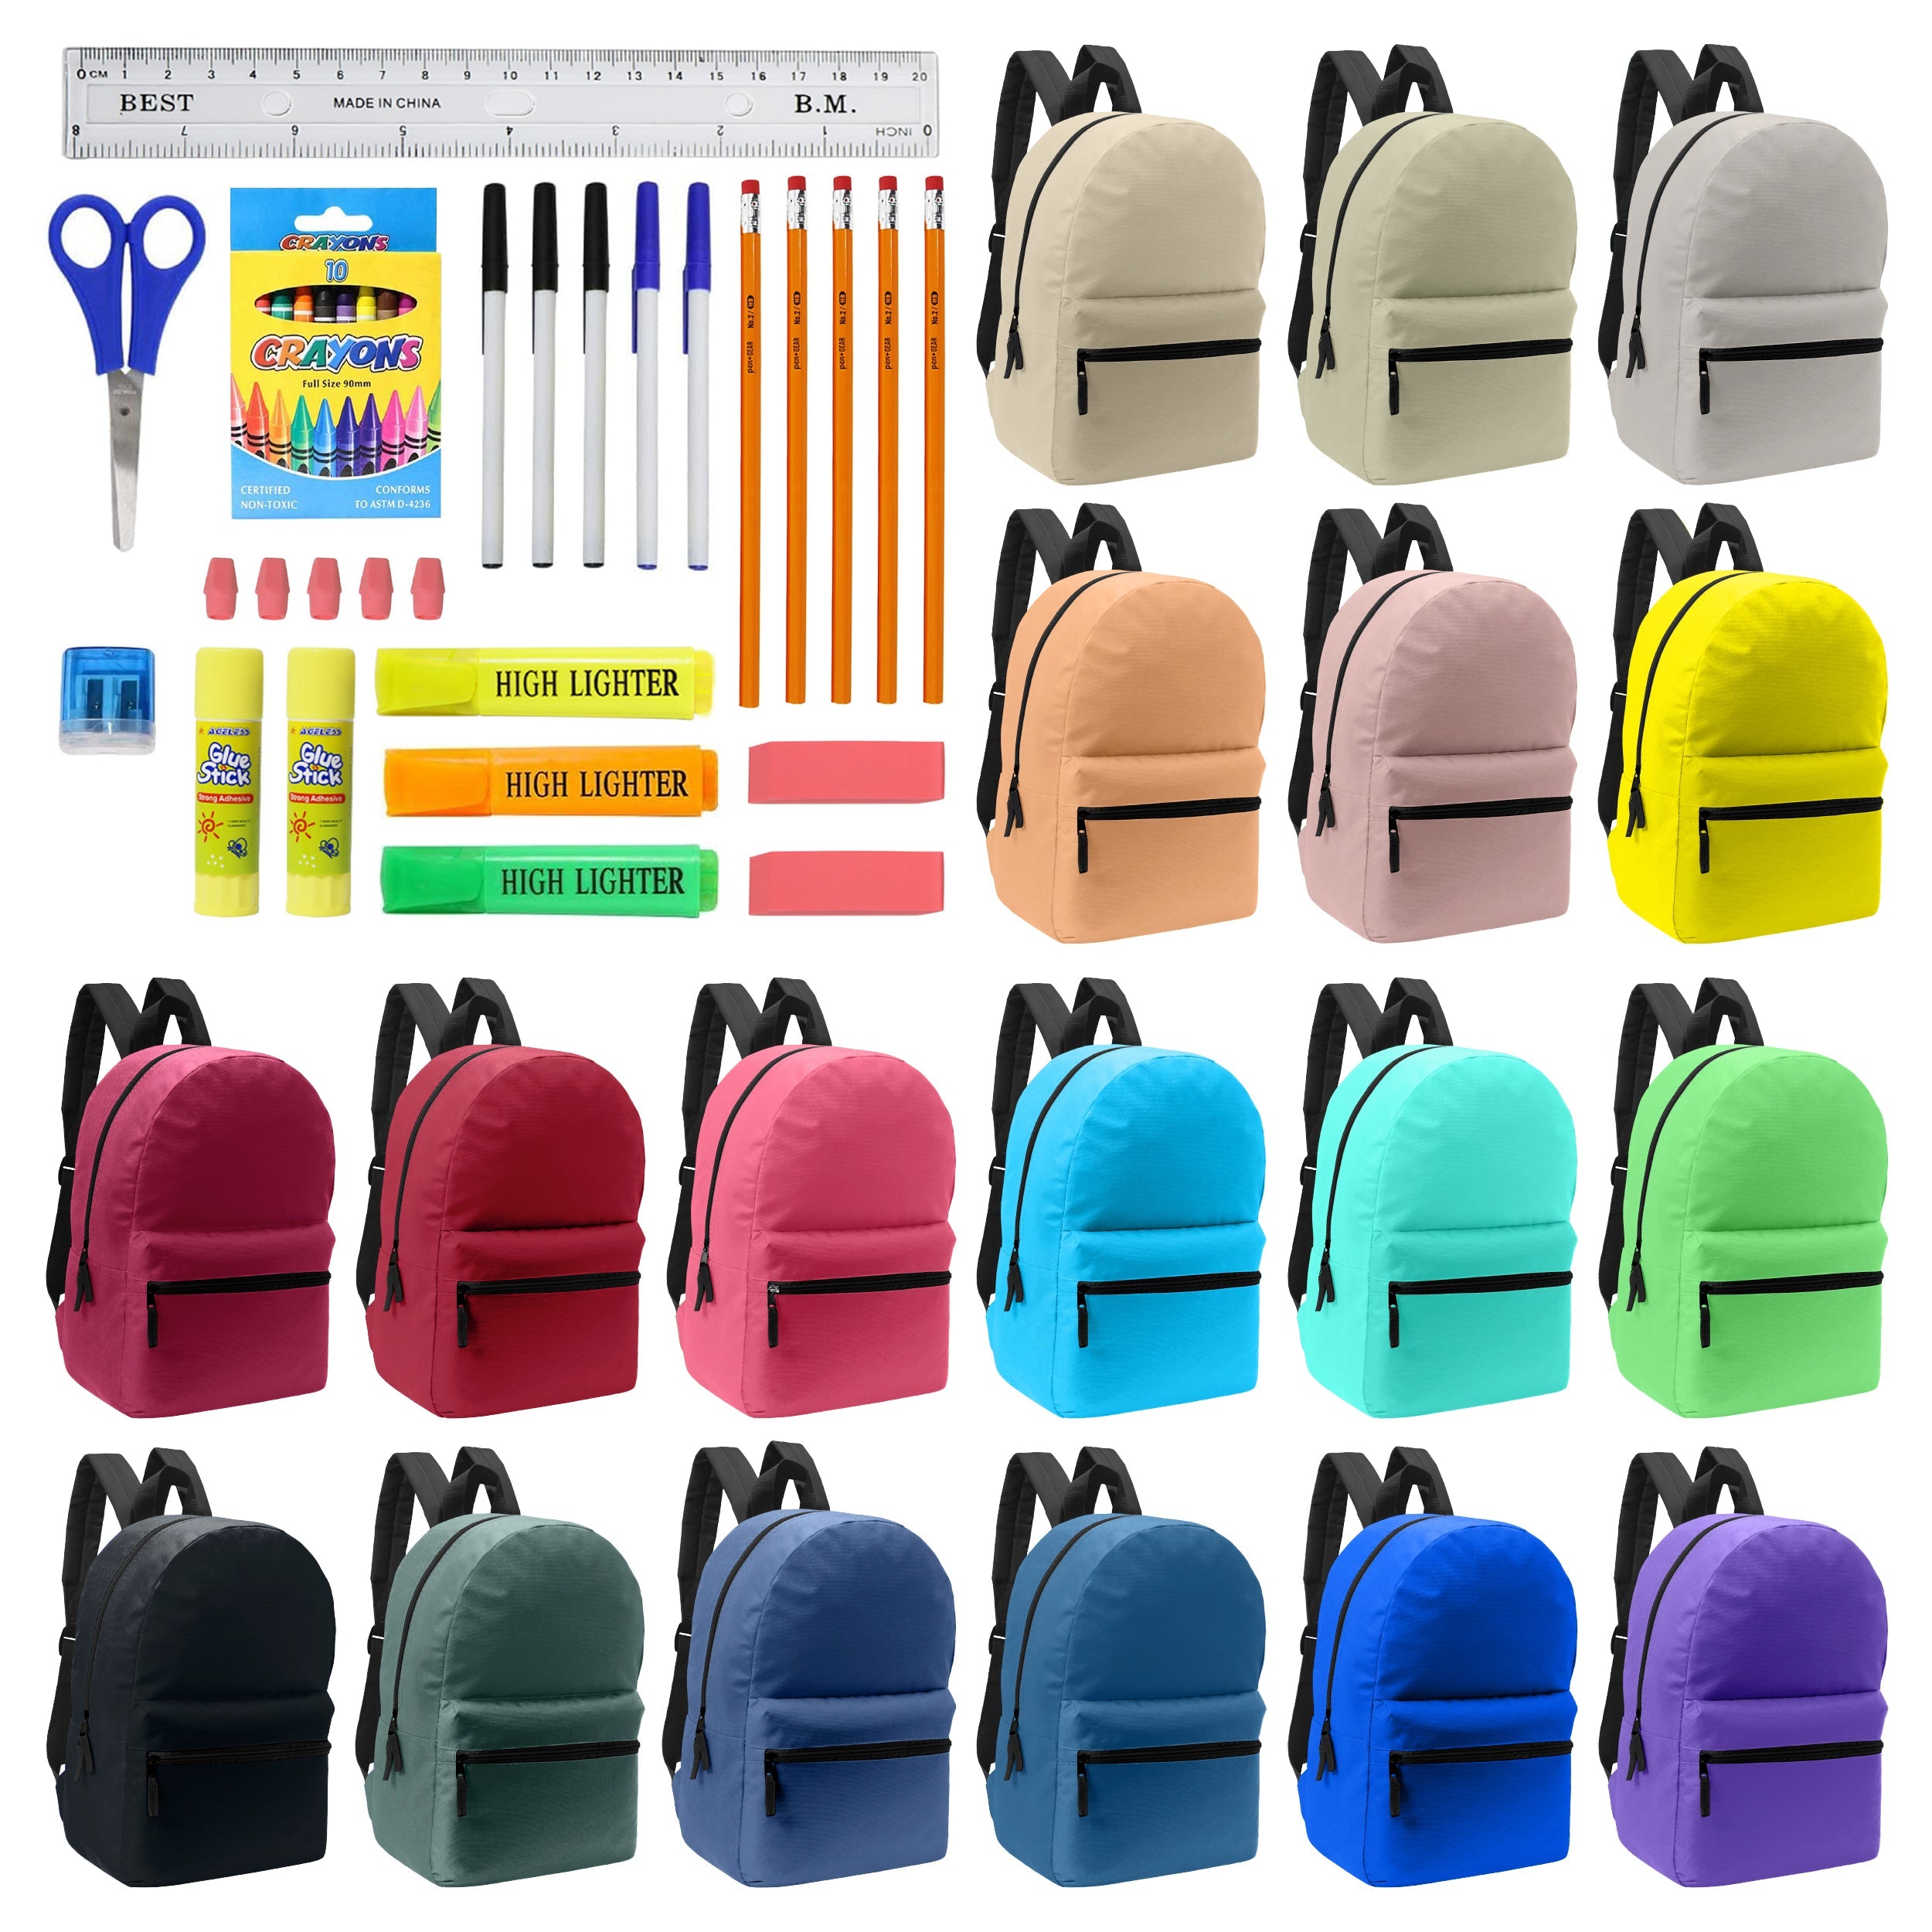 12 Wholesale Random Color 17" Backpacks and 12 Bulk School Supply Kits of Your Choice